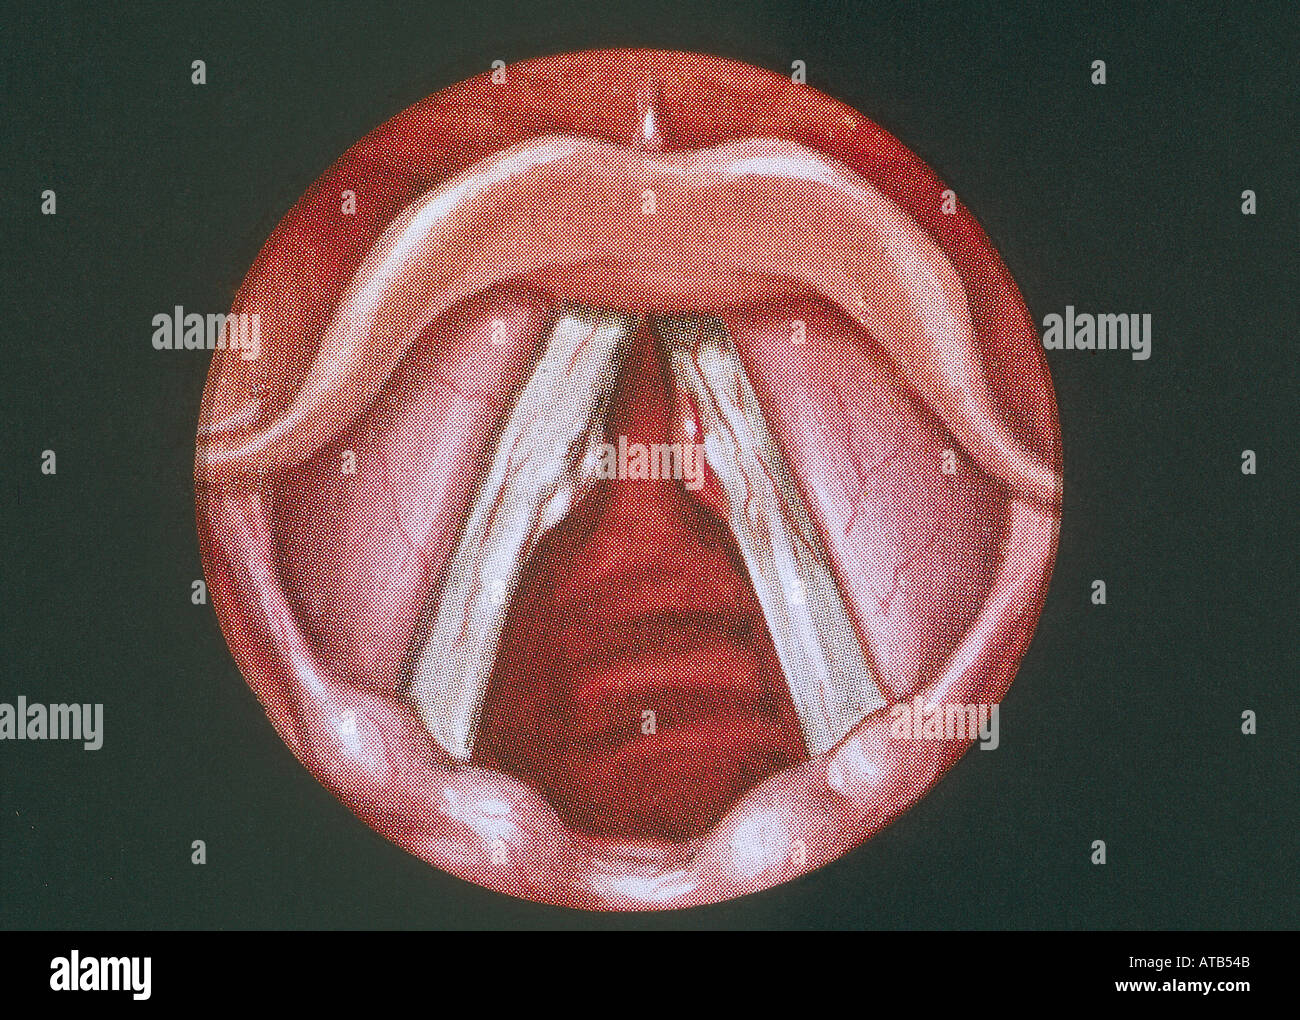 Diagram vocal cord nodules Stock Photo - Alamy